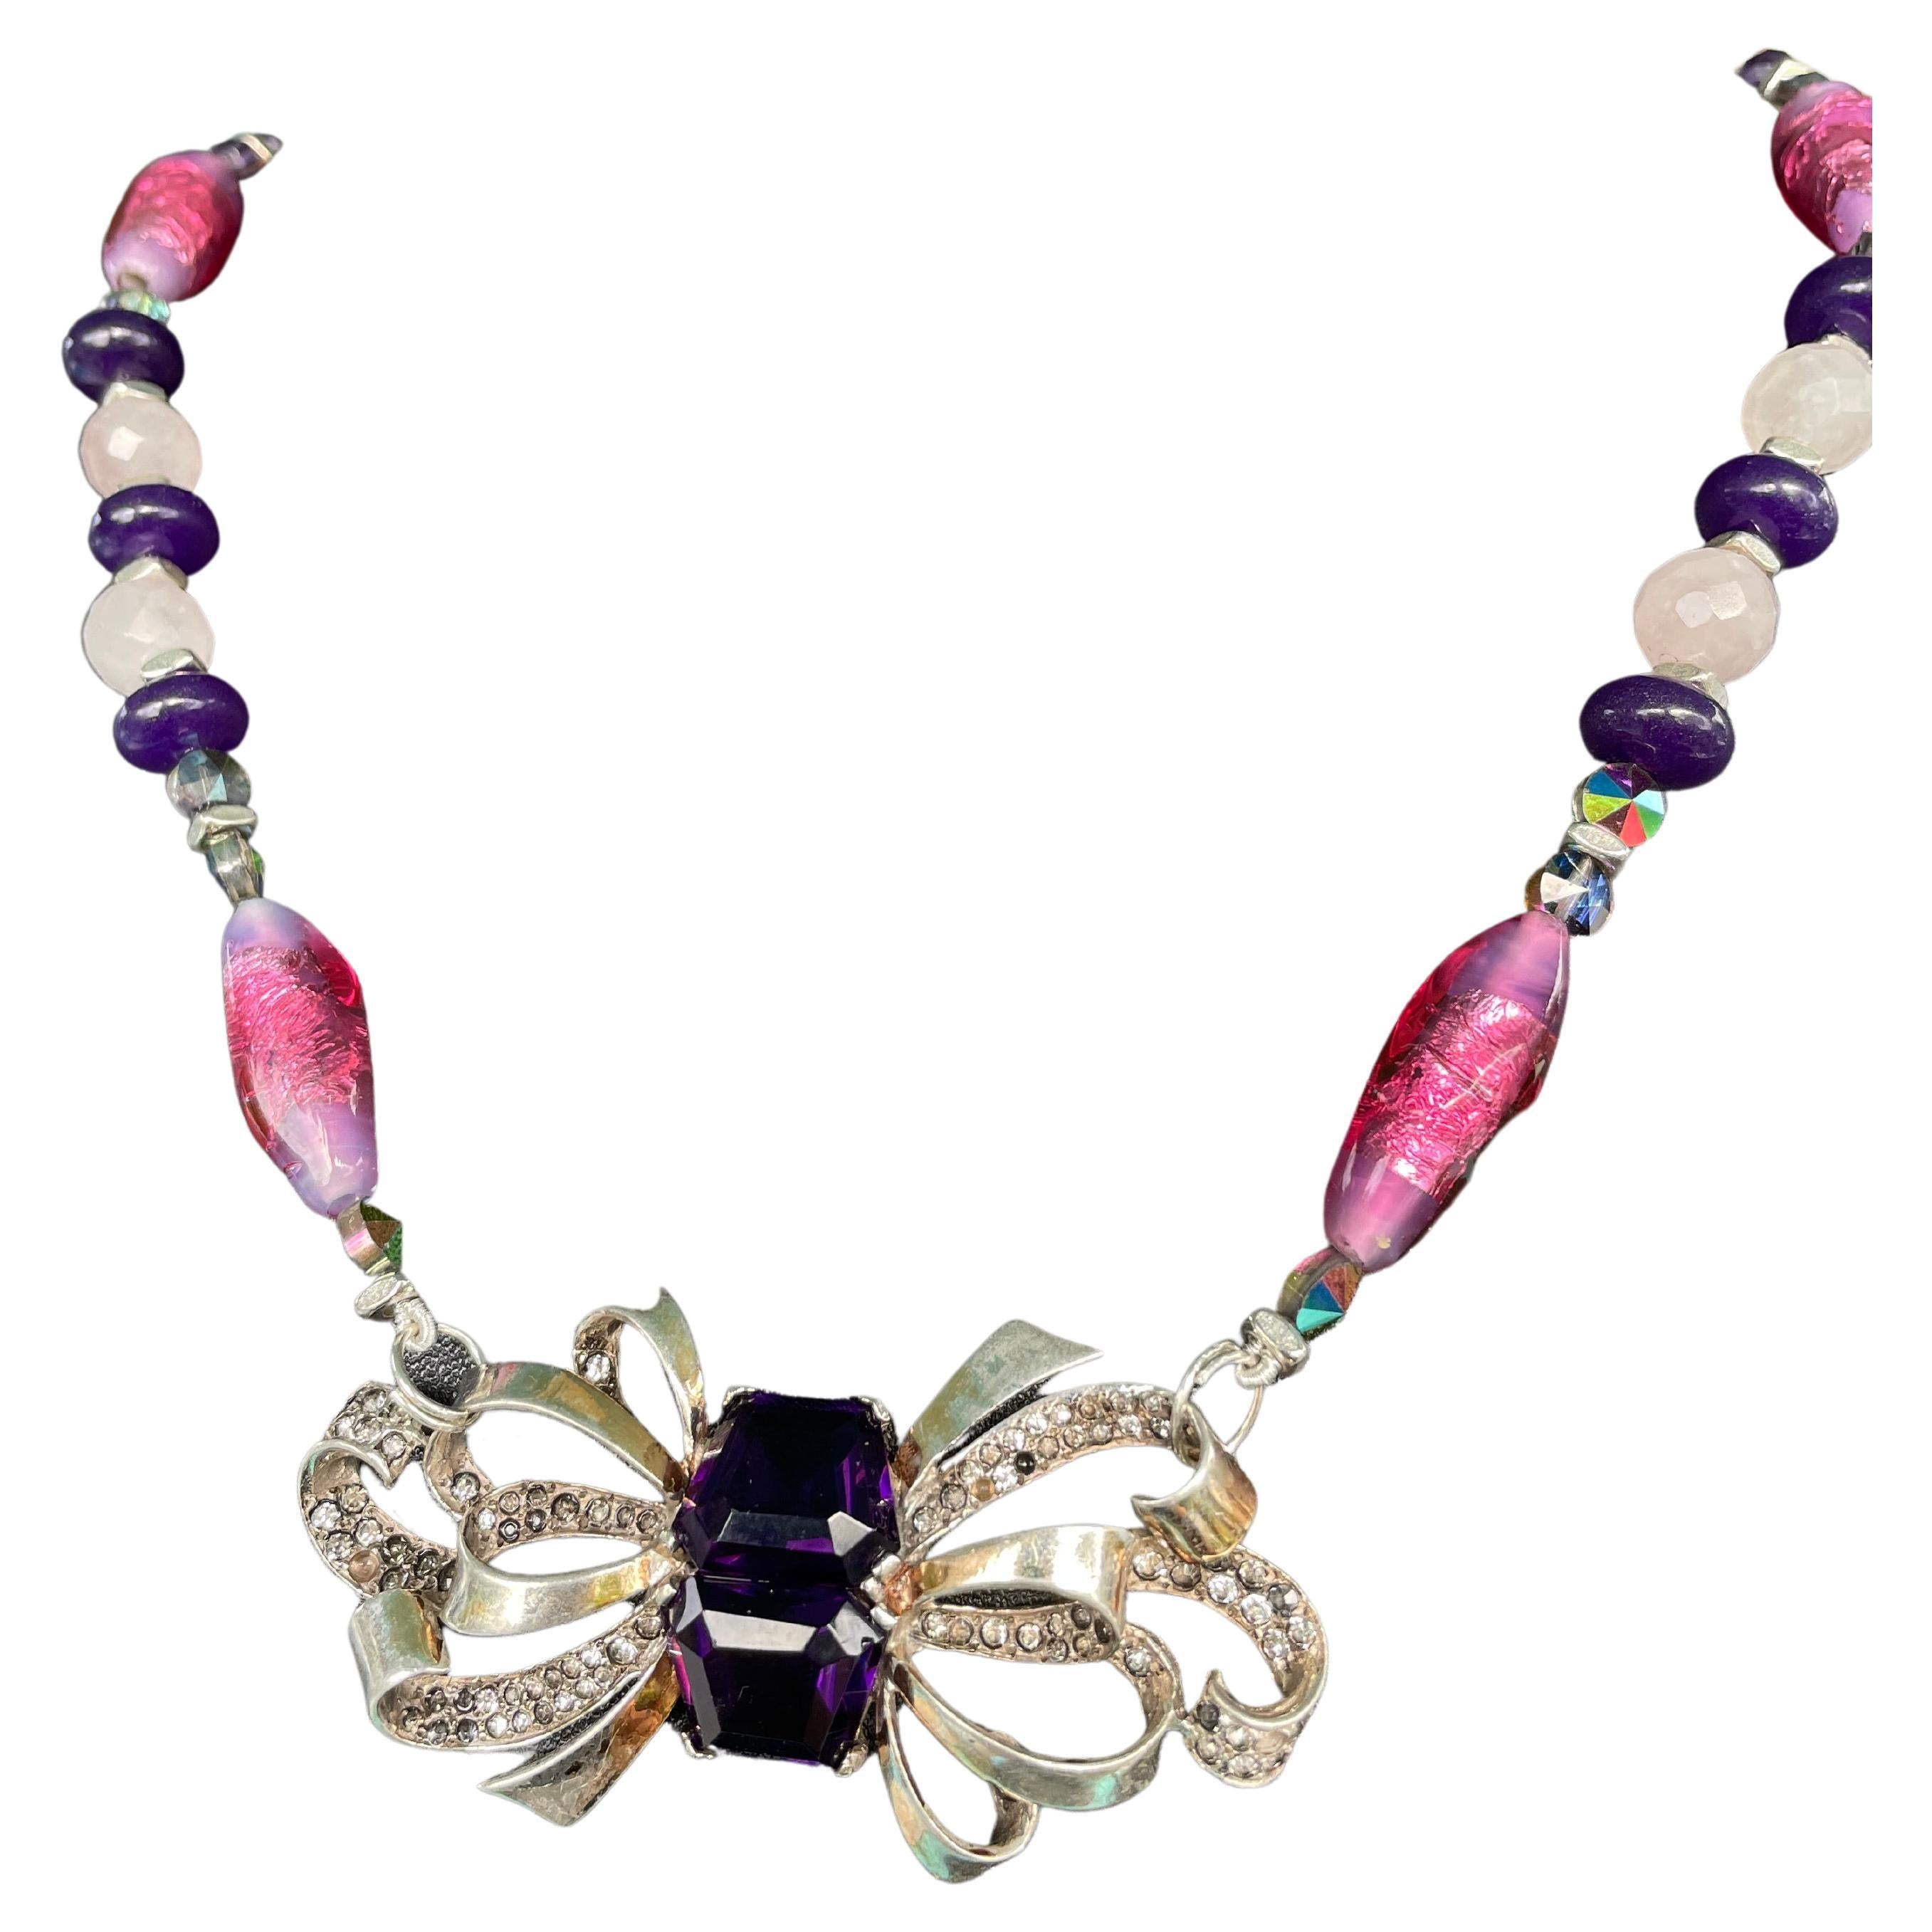 LB vintage Sterling Silver Art Nouveau Bow Brooch Venetian glass necklace